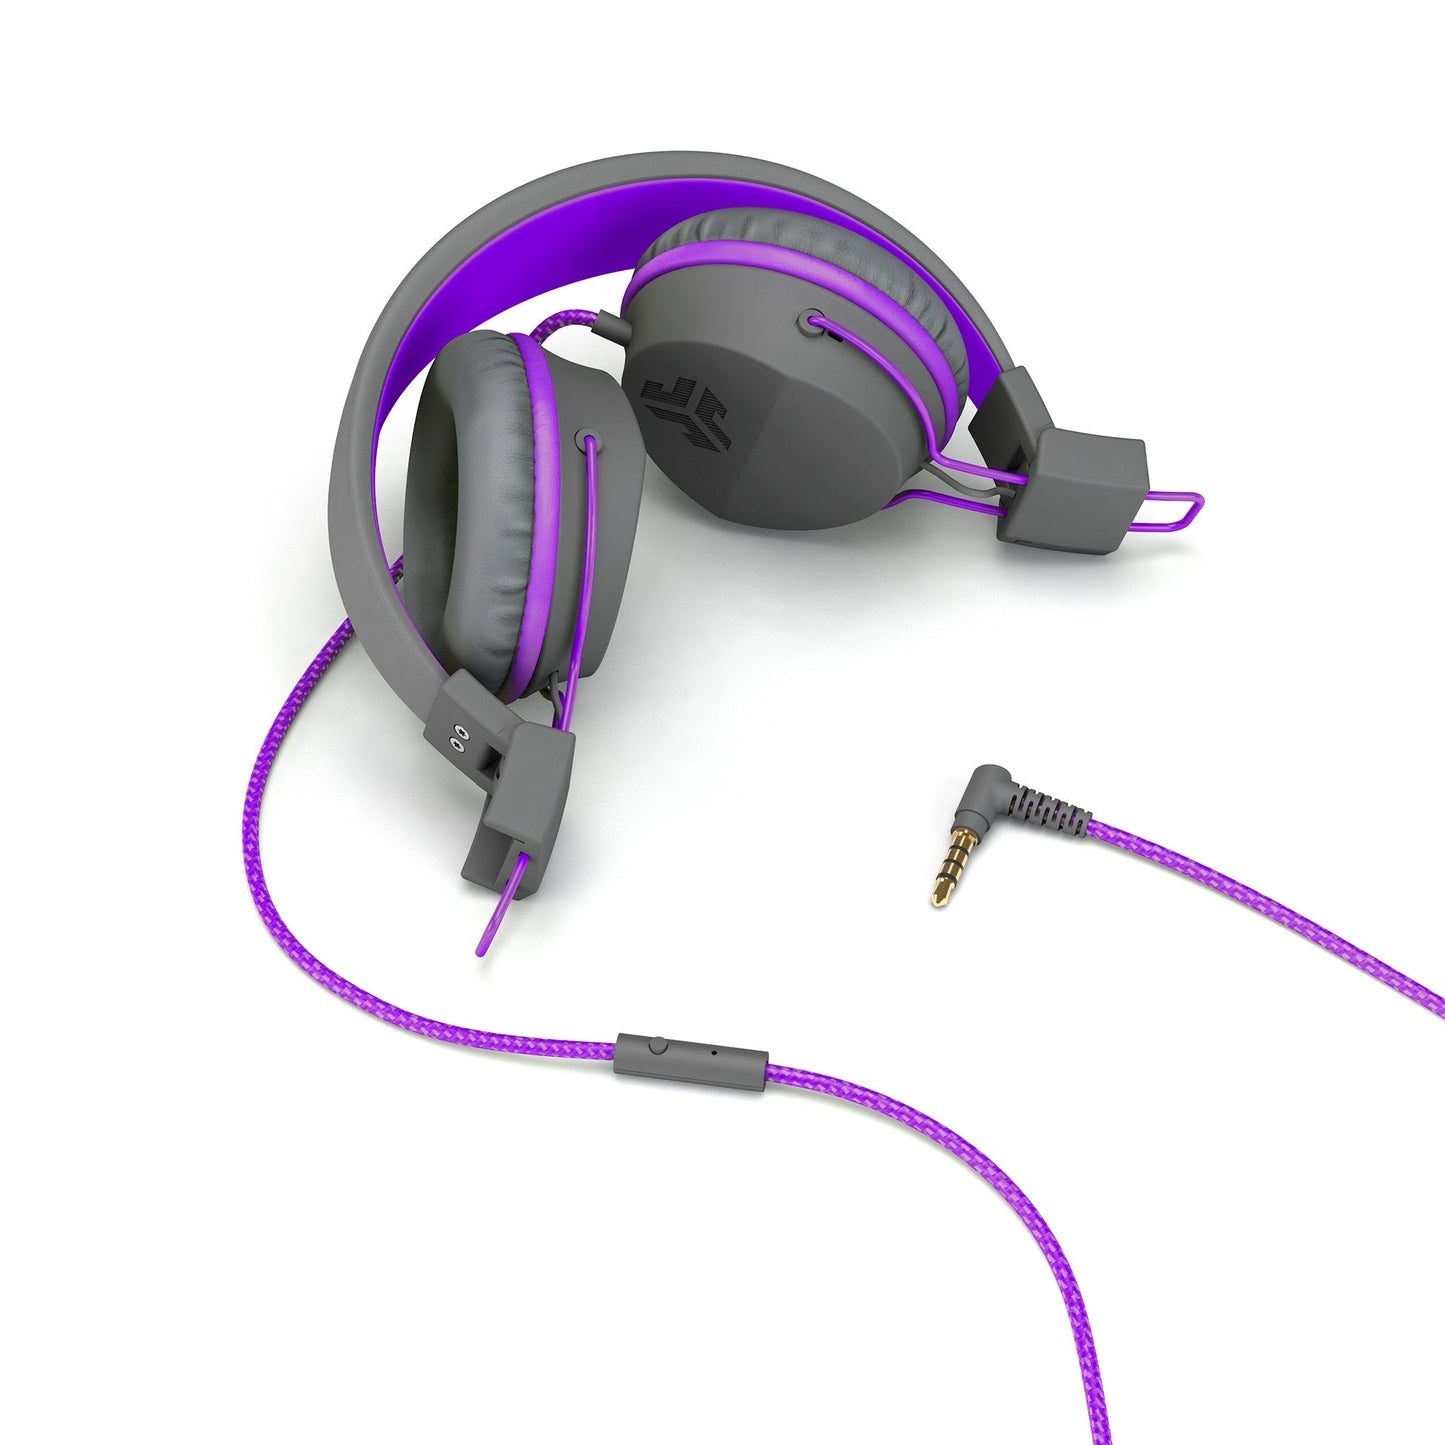 JBuddies Studio On-Ear Kids Headphones Graphite / Violet|